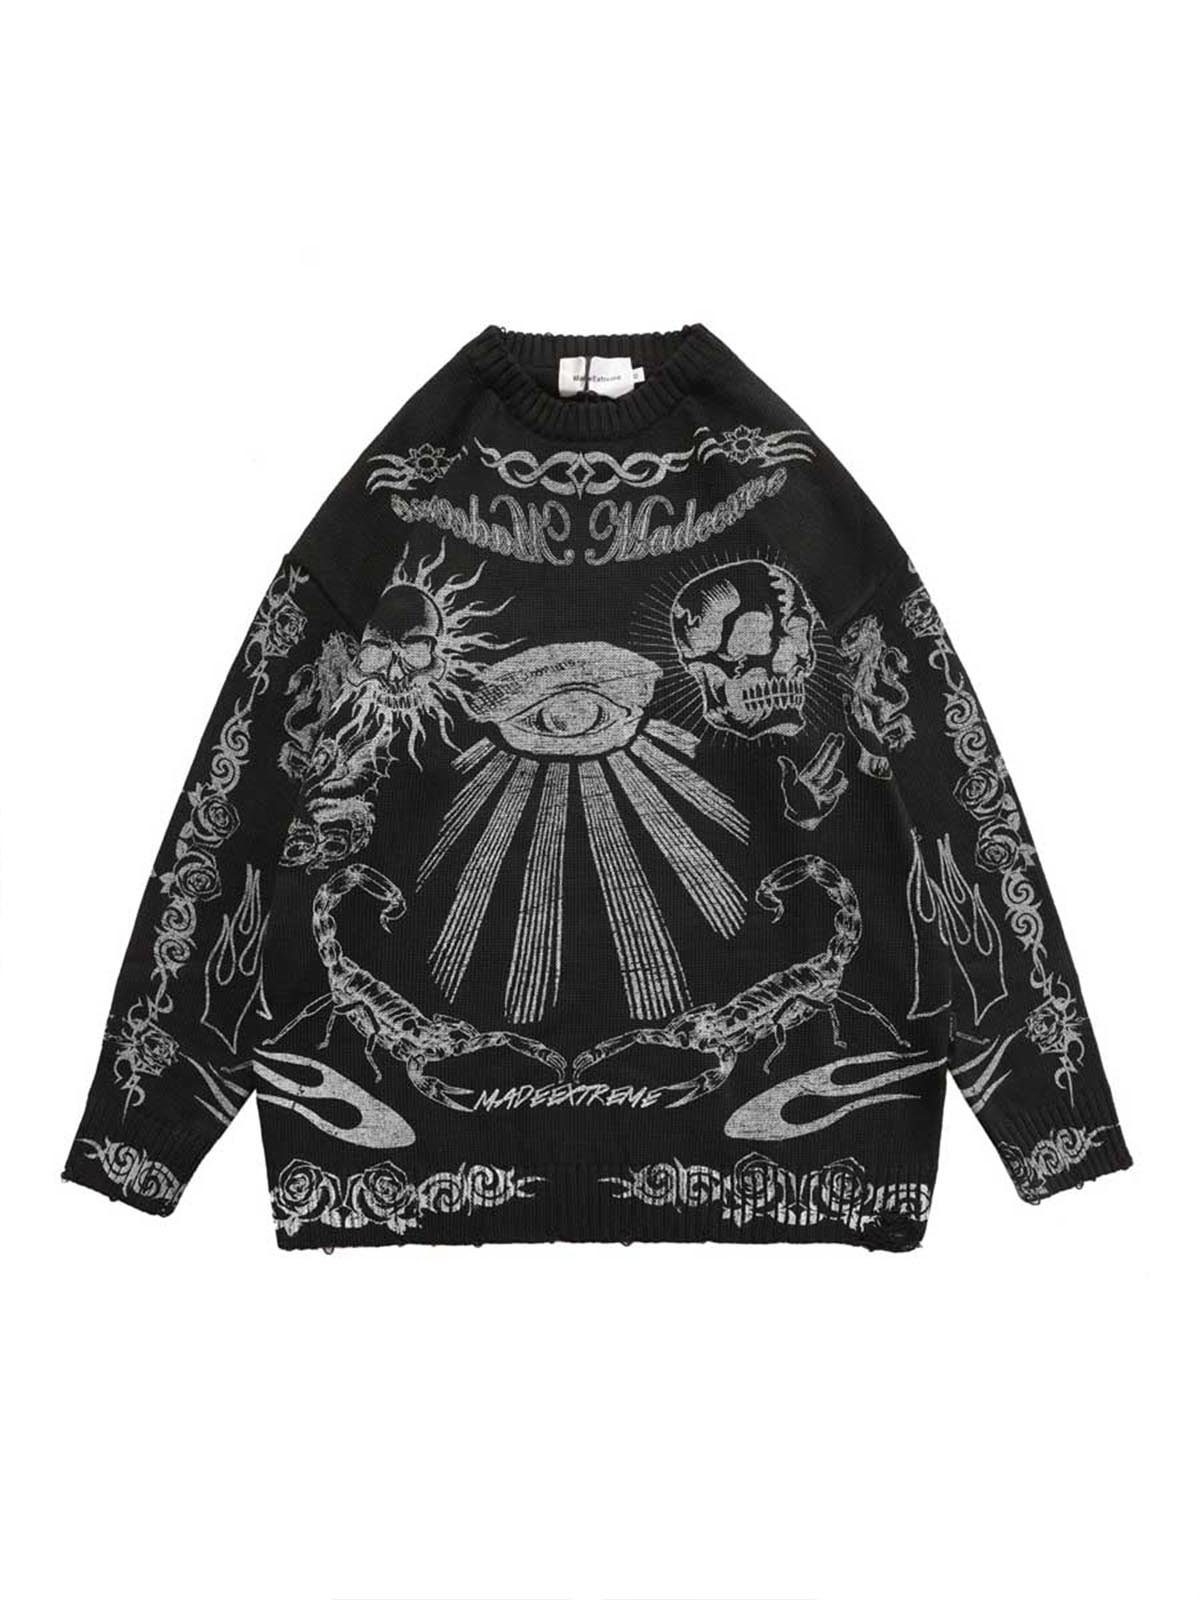 The Skull Print Distressed Sweater